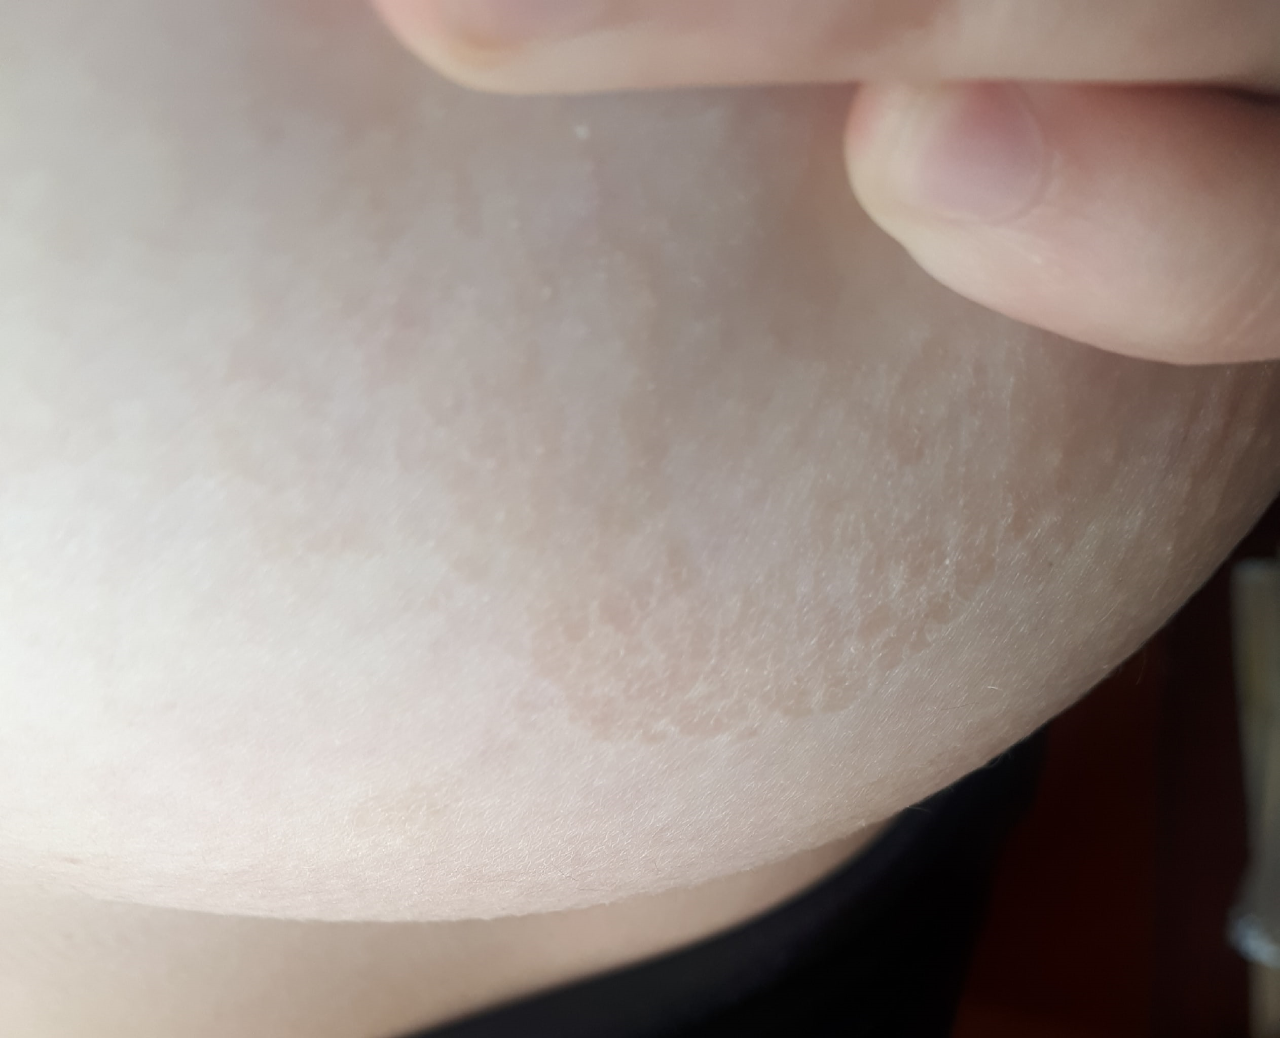 светло коричневые пятна на груди у женщин фото 2